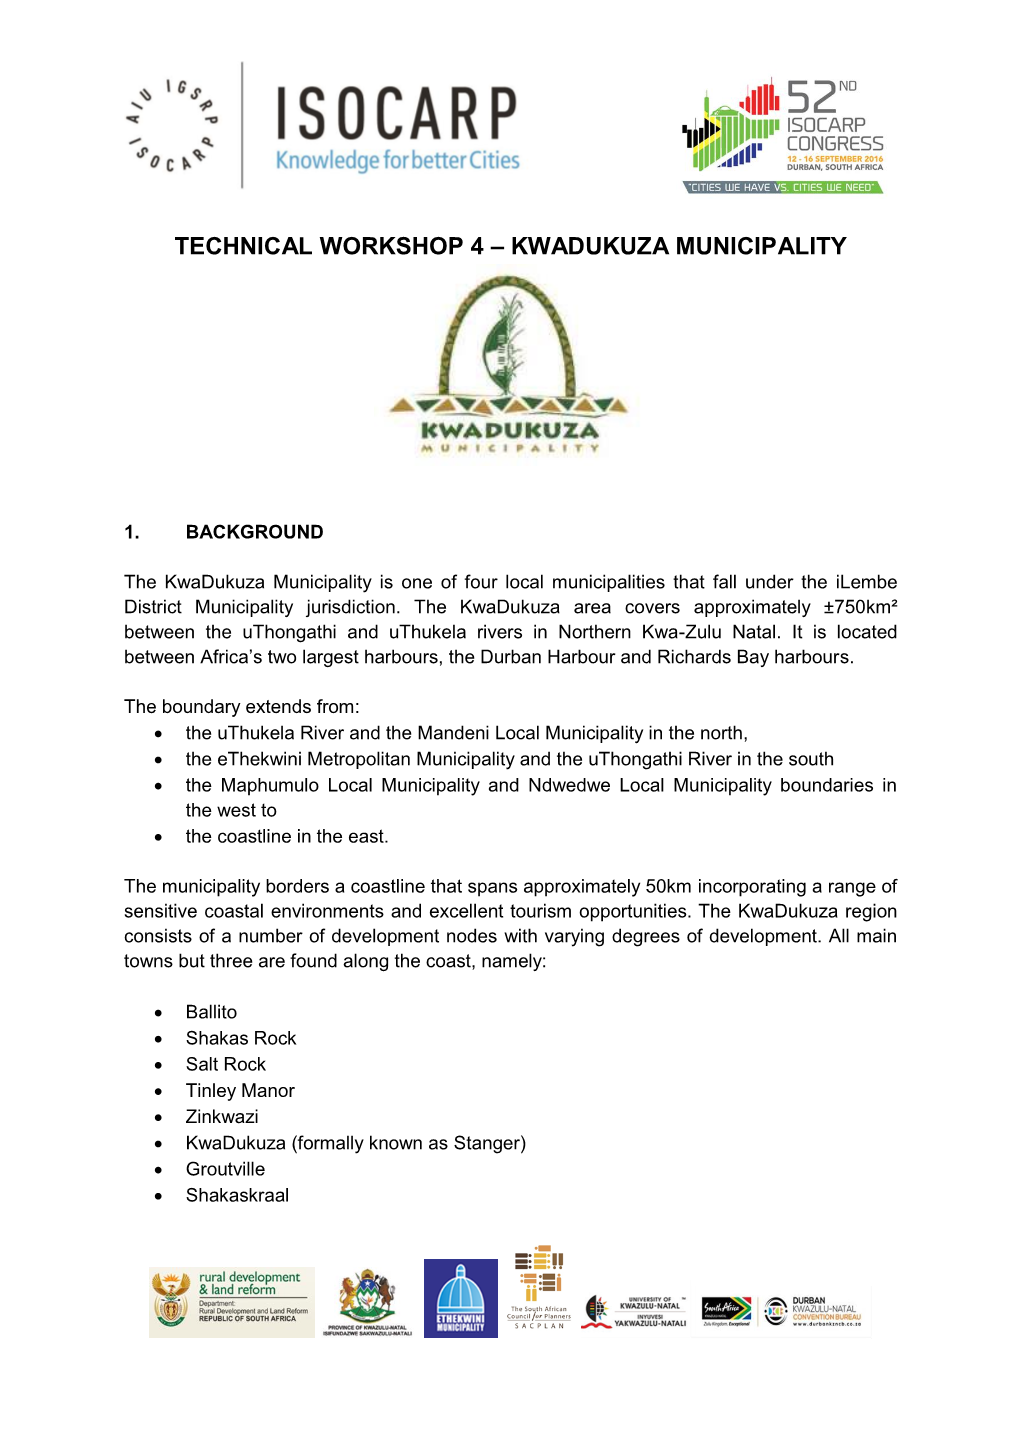 Technical Workshop 4 – Kwadukuza Municipality